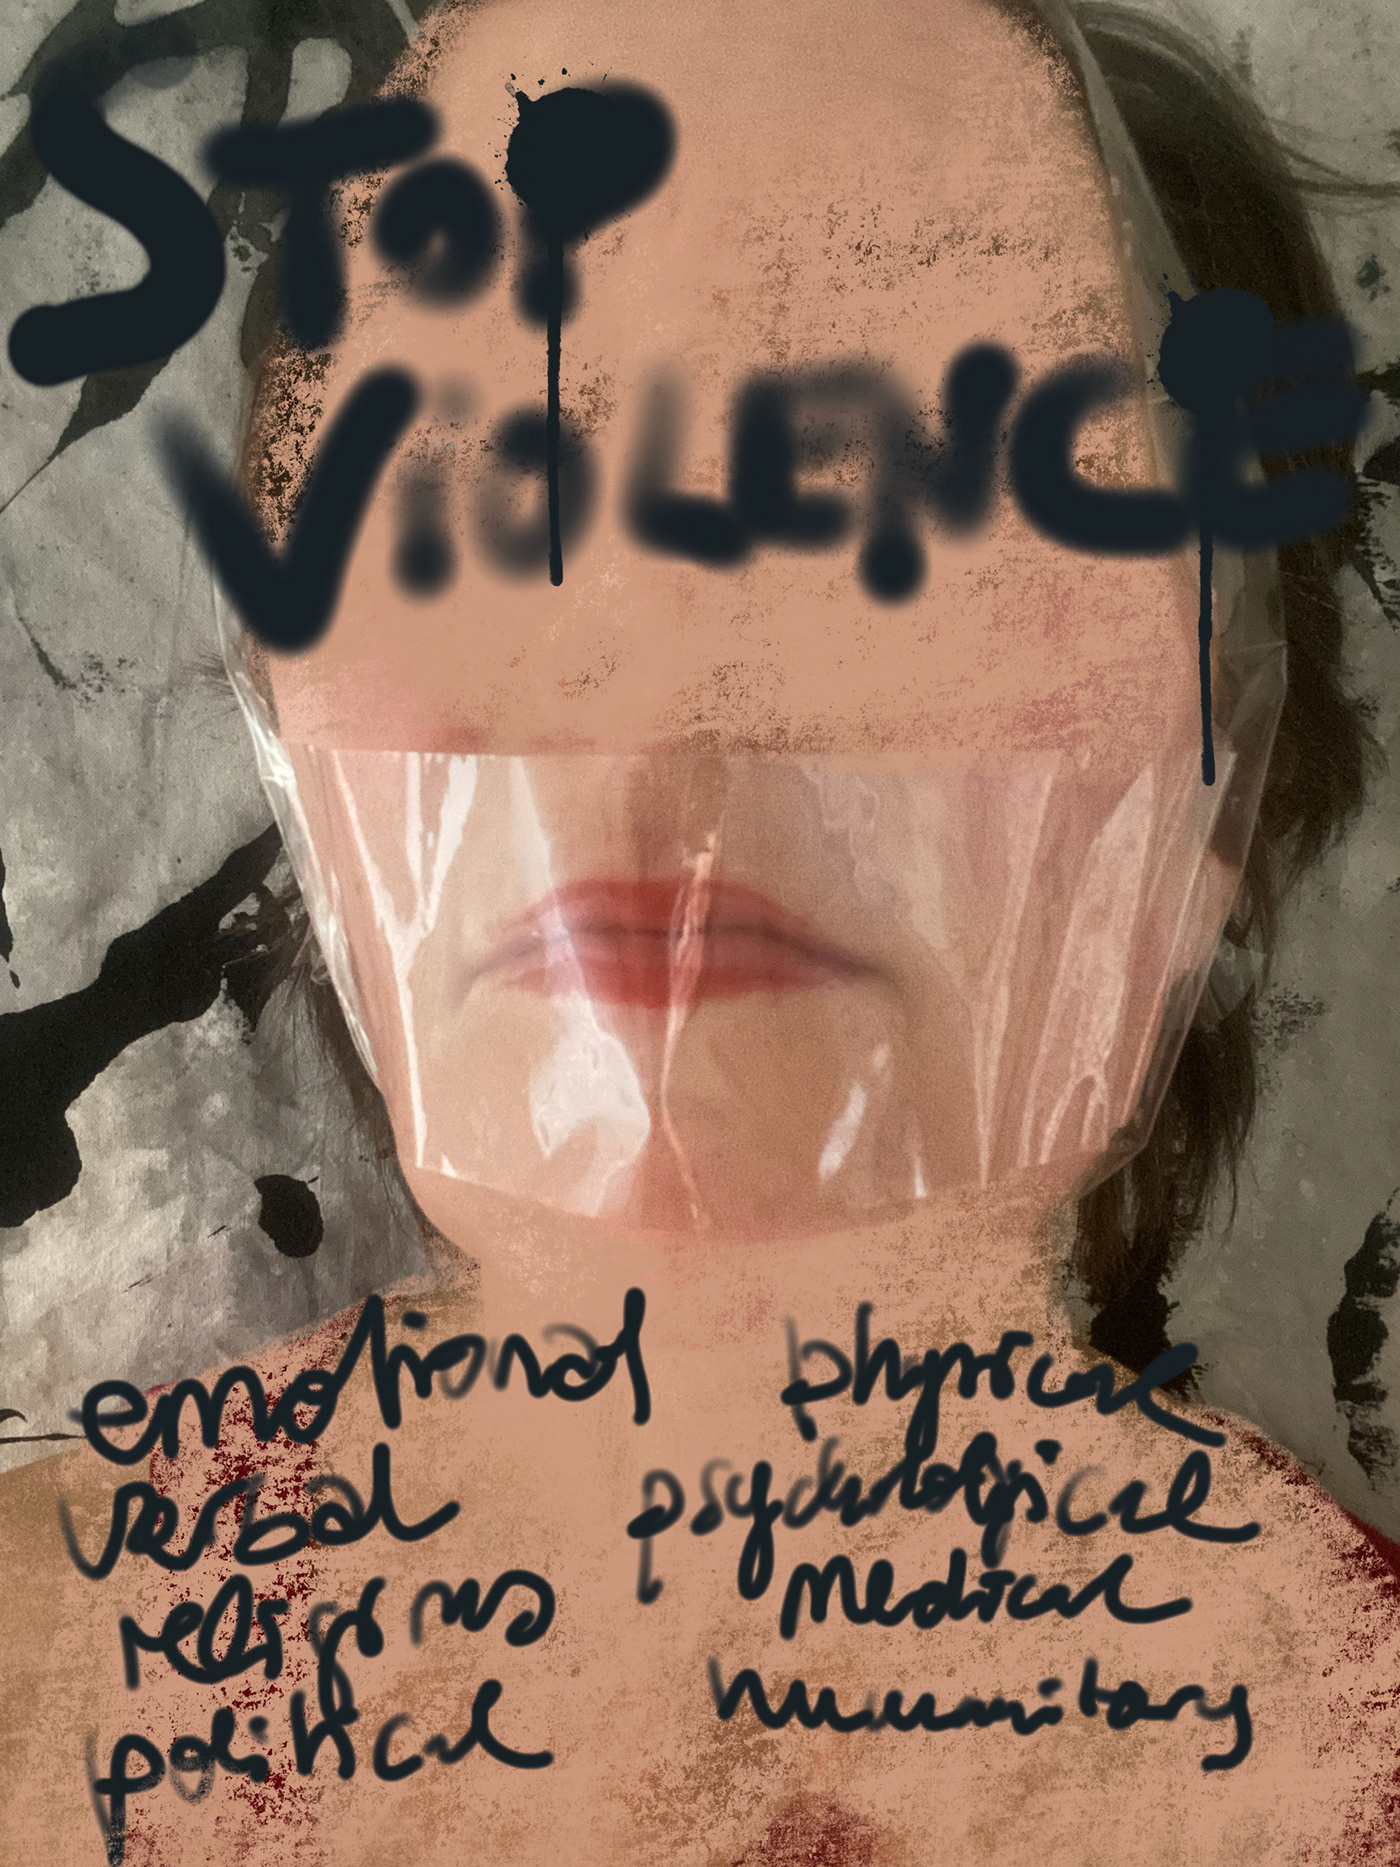 against violence woman art toxic masculinity Female Empowerment feminism feminist